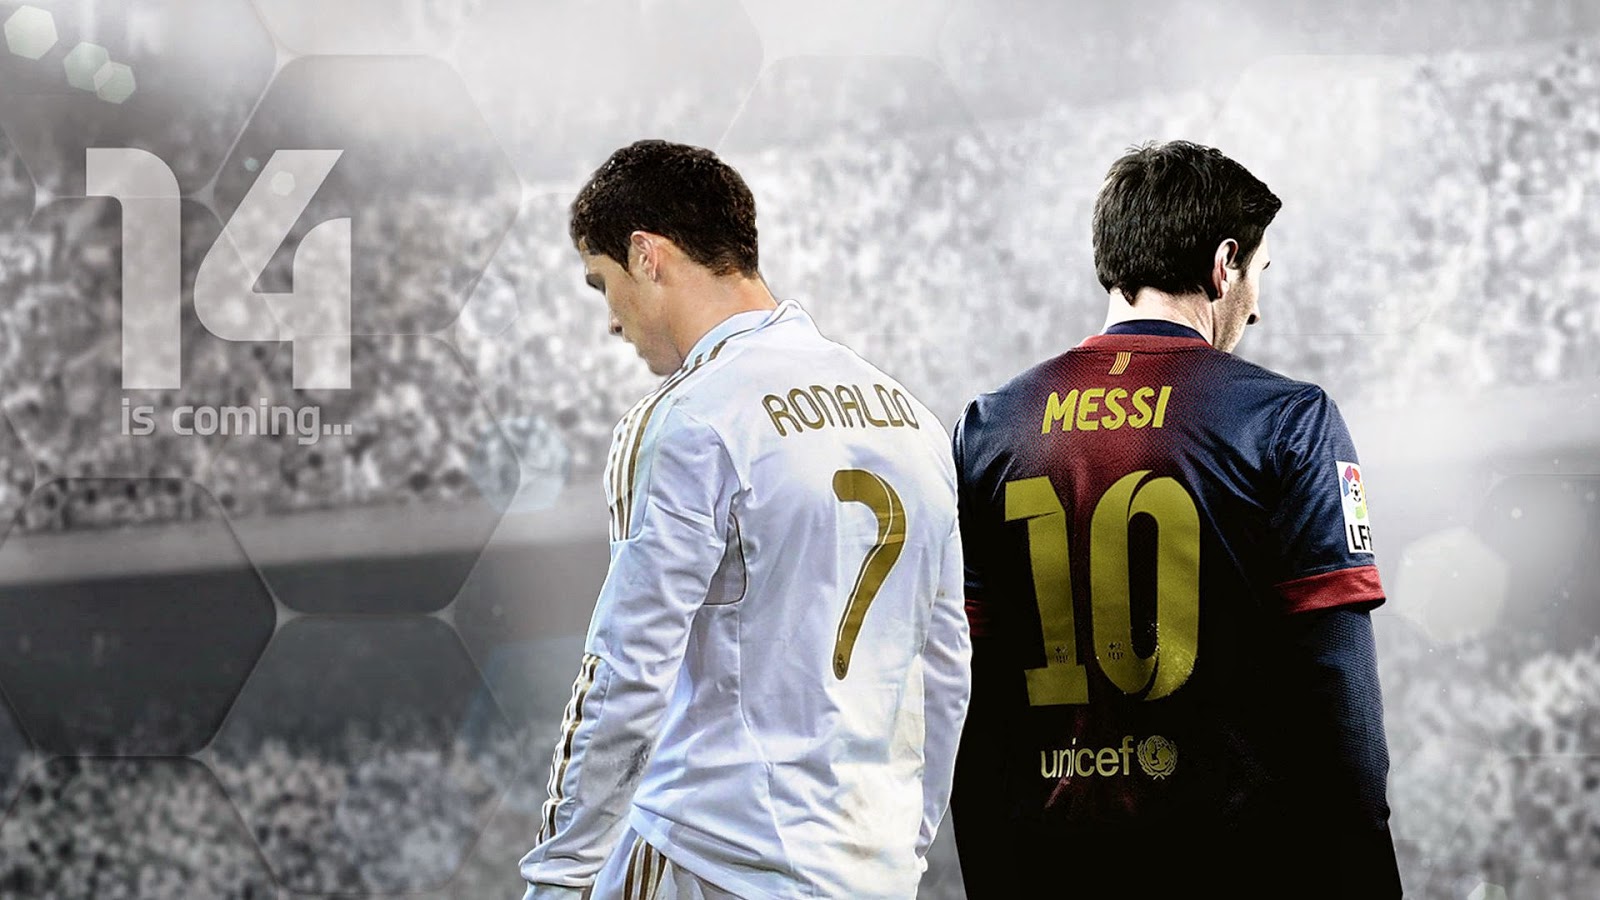 Messi Wallpaper Ronaldo Vs